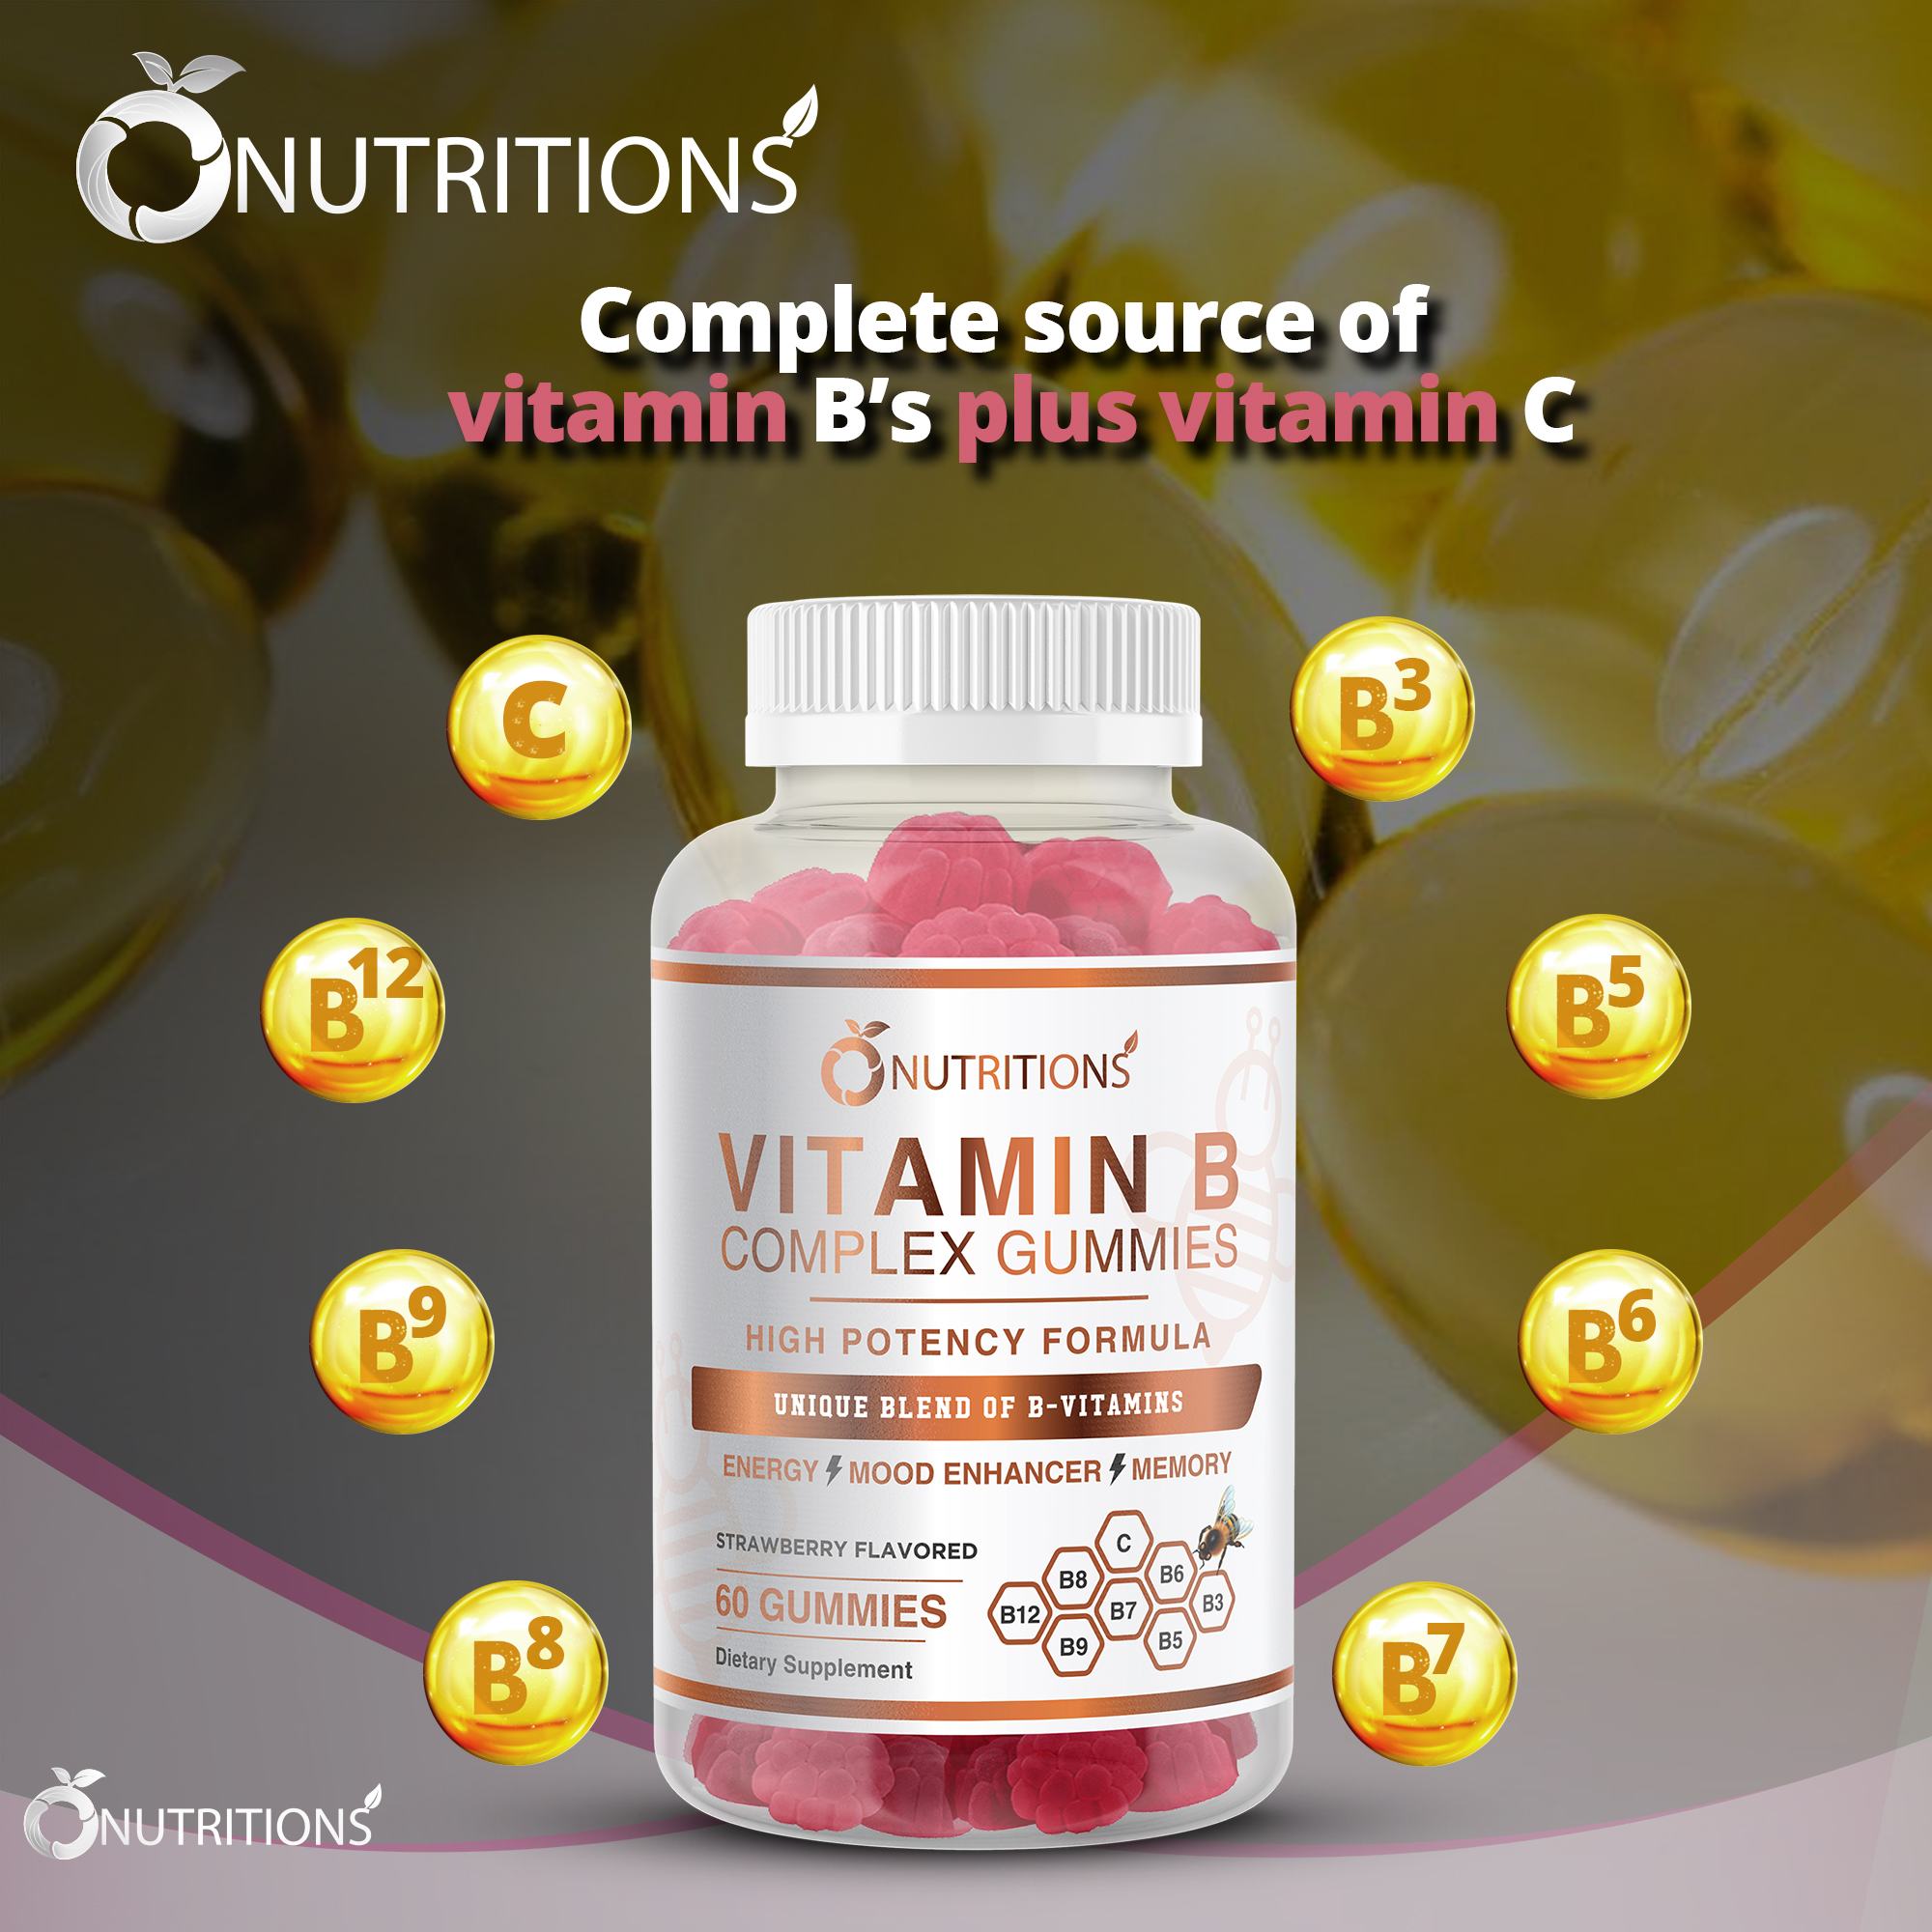 O Nutritions 2 Pack Vitamin B Complex Vegan Gummies with Vitamin B12, B7 as Biotin , B6, B3 as Niacin, B5, B6, B8, B9 - image 3 of 5